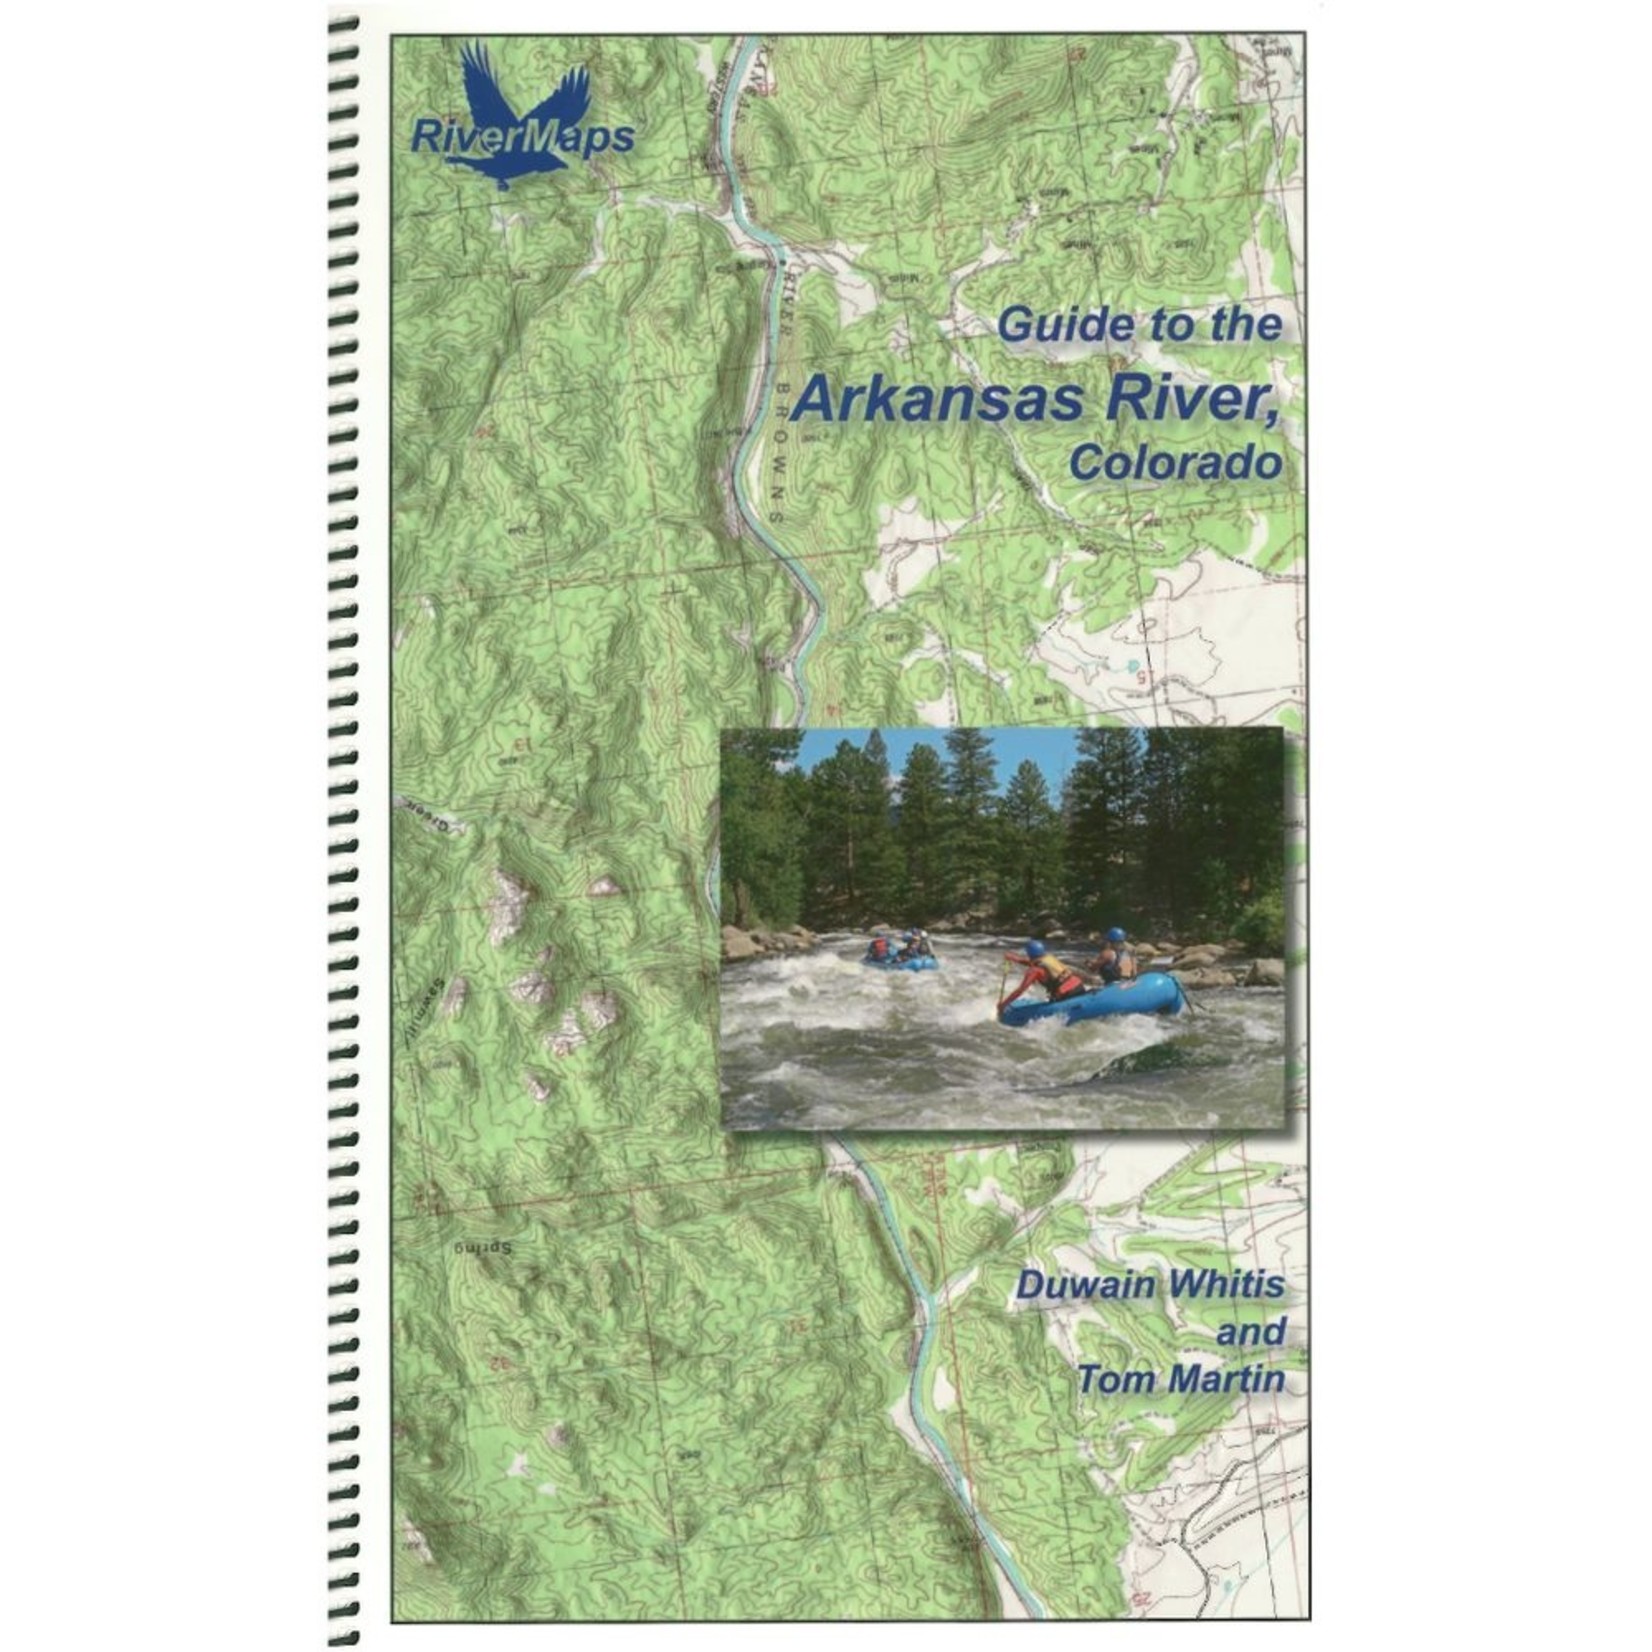 Rivermaps RiverMaps Arkansas River Colorado Guide Book